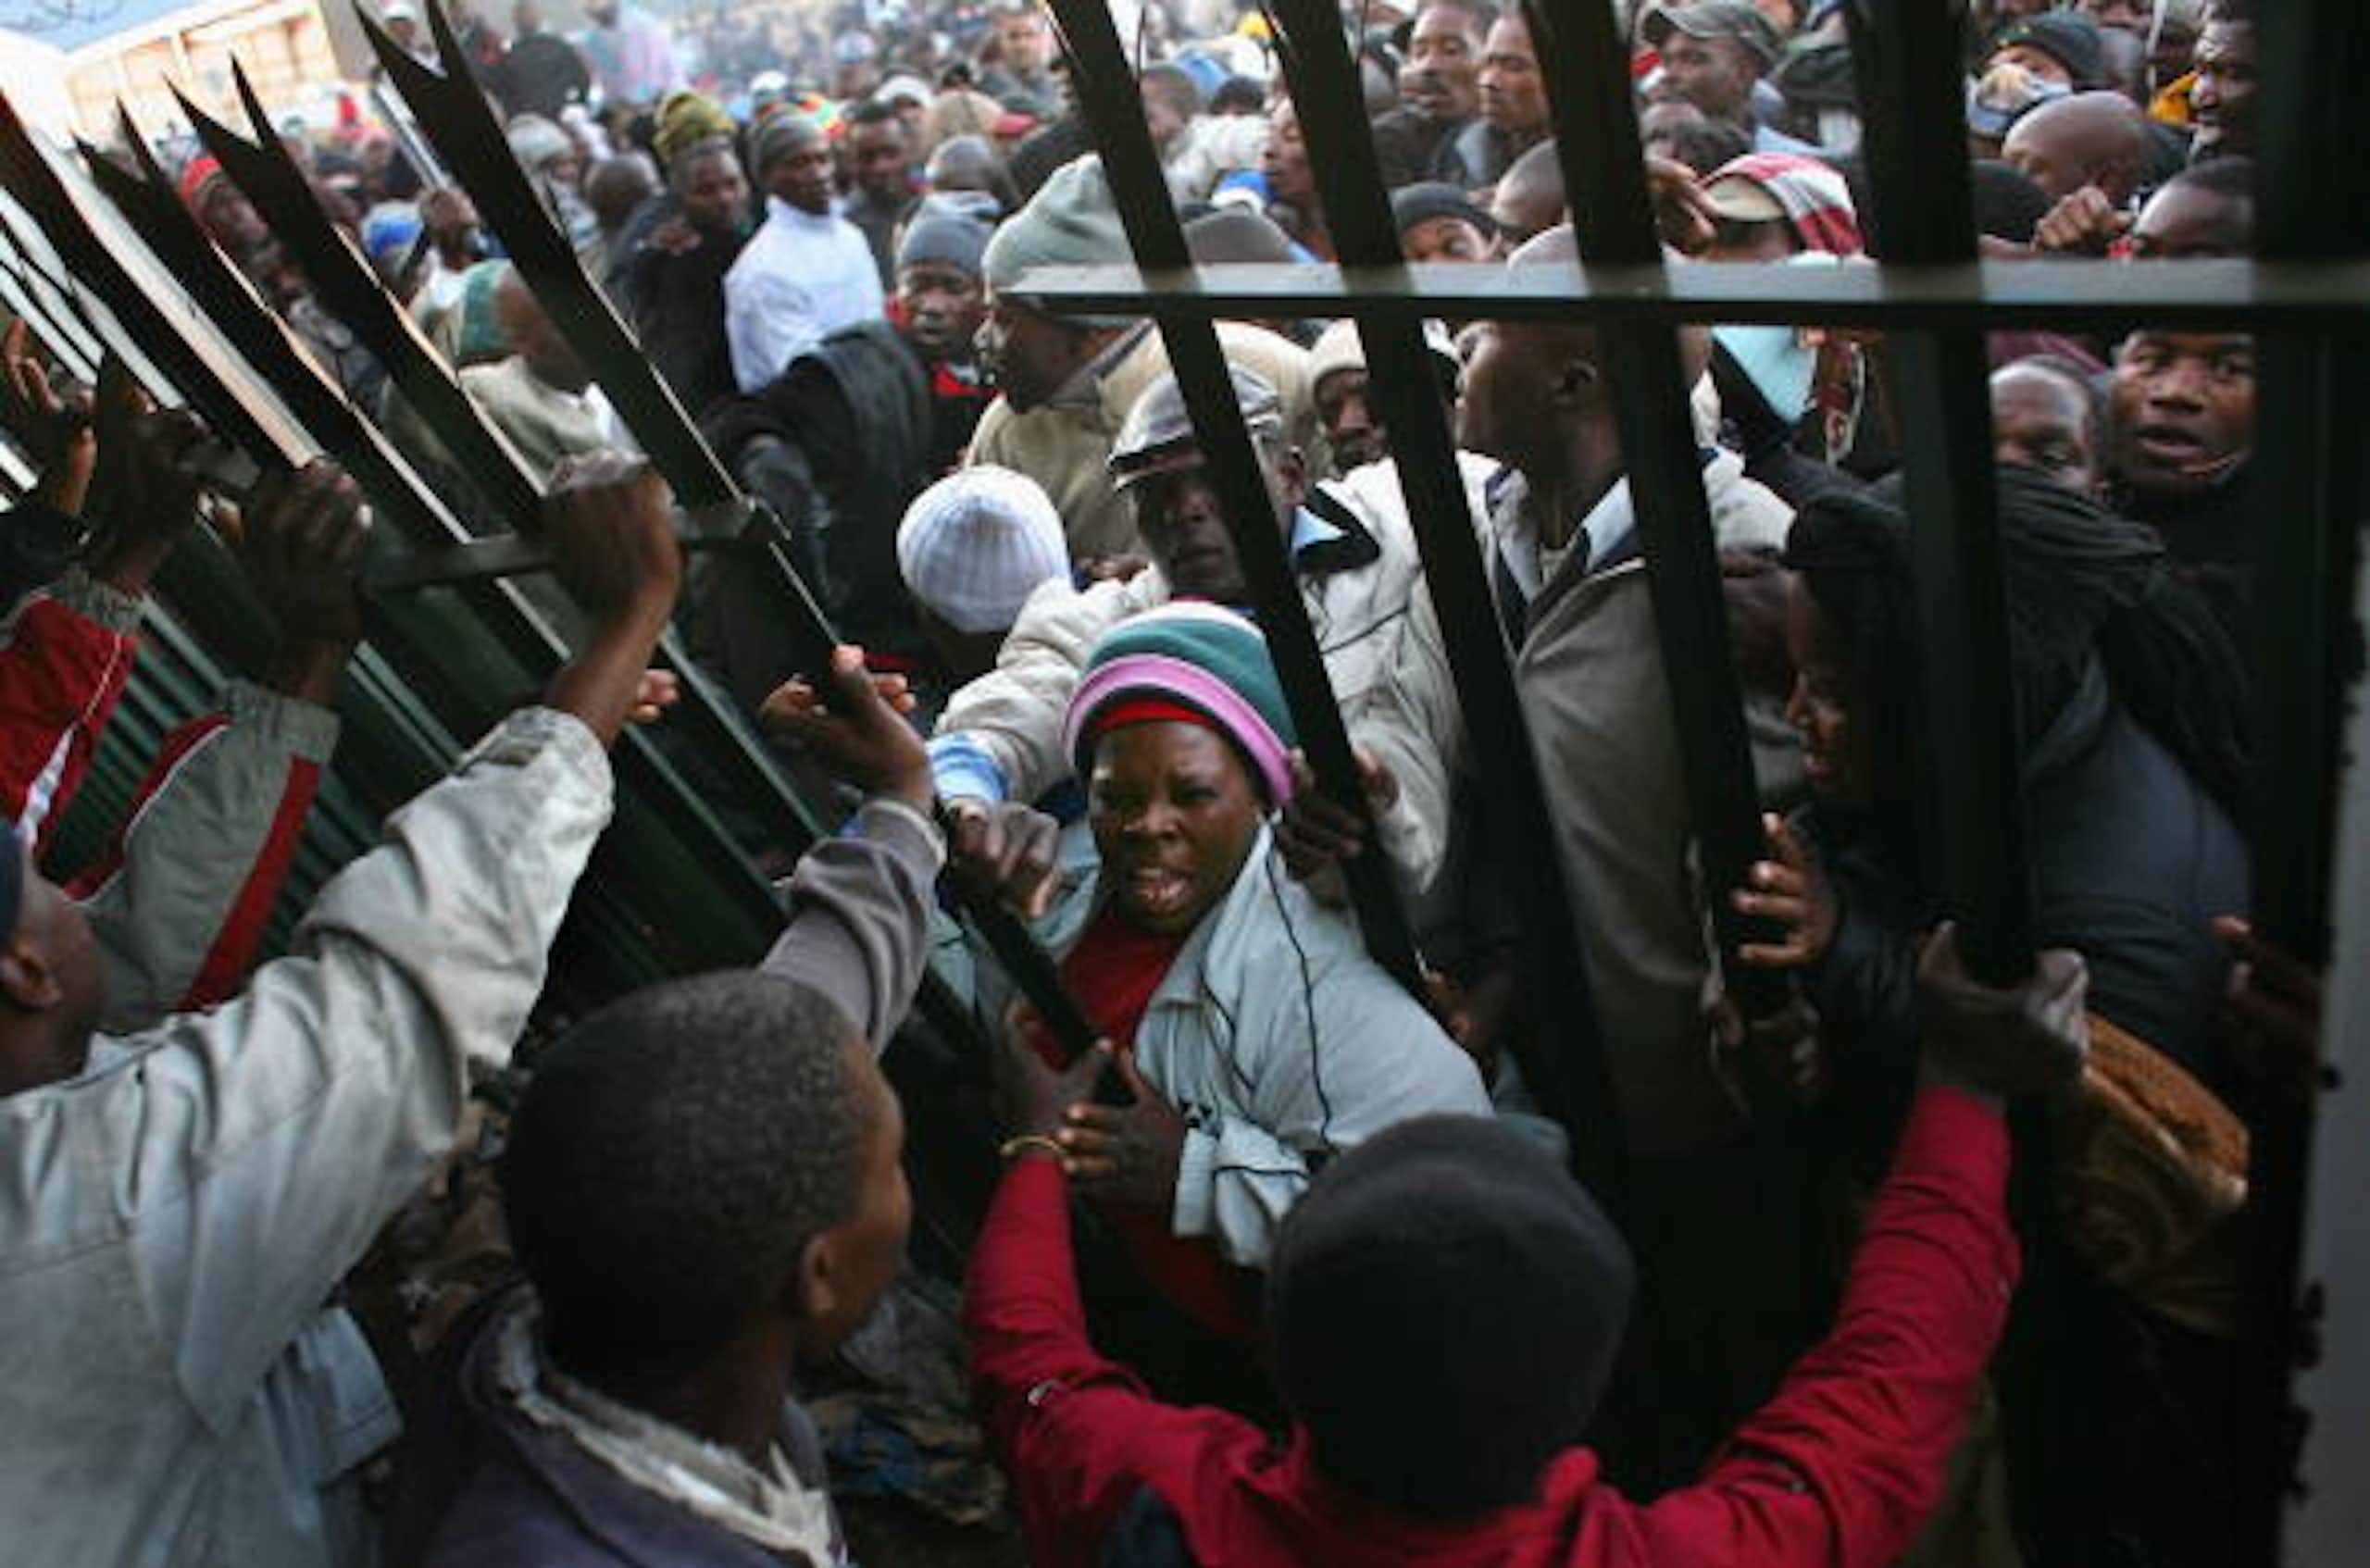 Hundres of men anmd women storm an asylum permits centre.